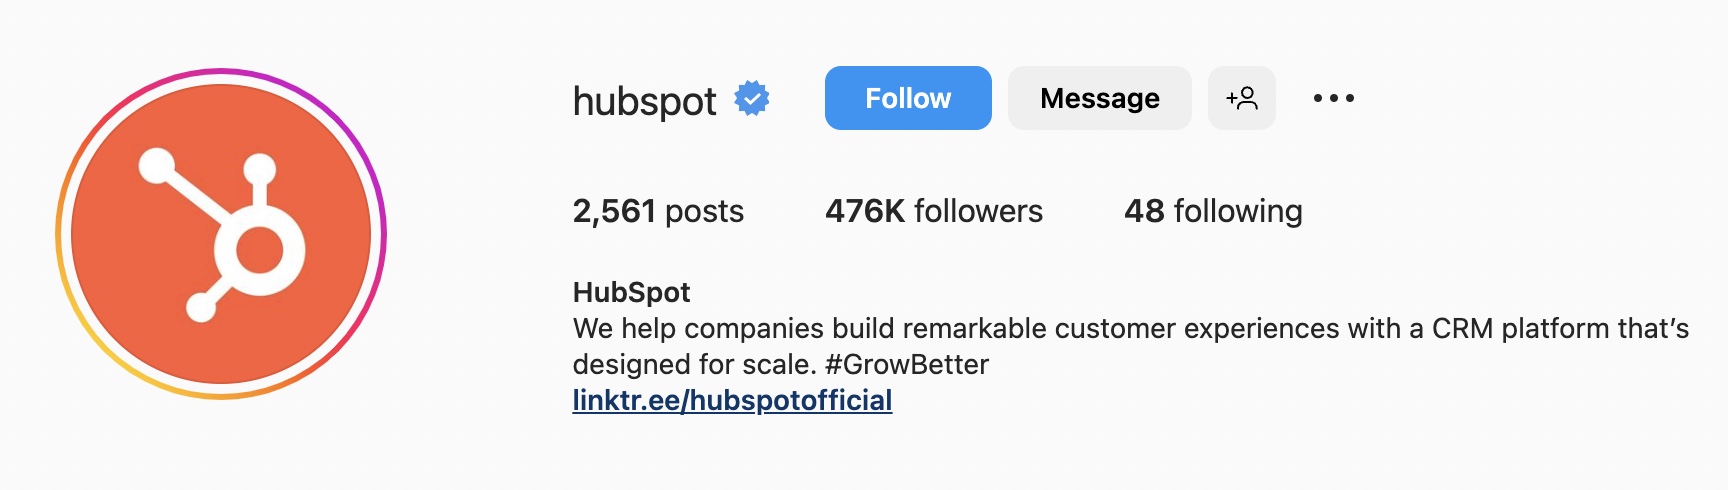 Instagram bio ideas for SaaS businesses, hubspot